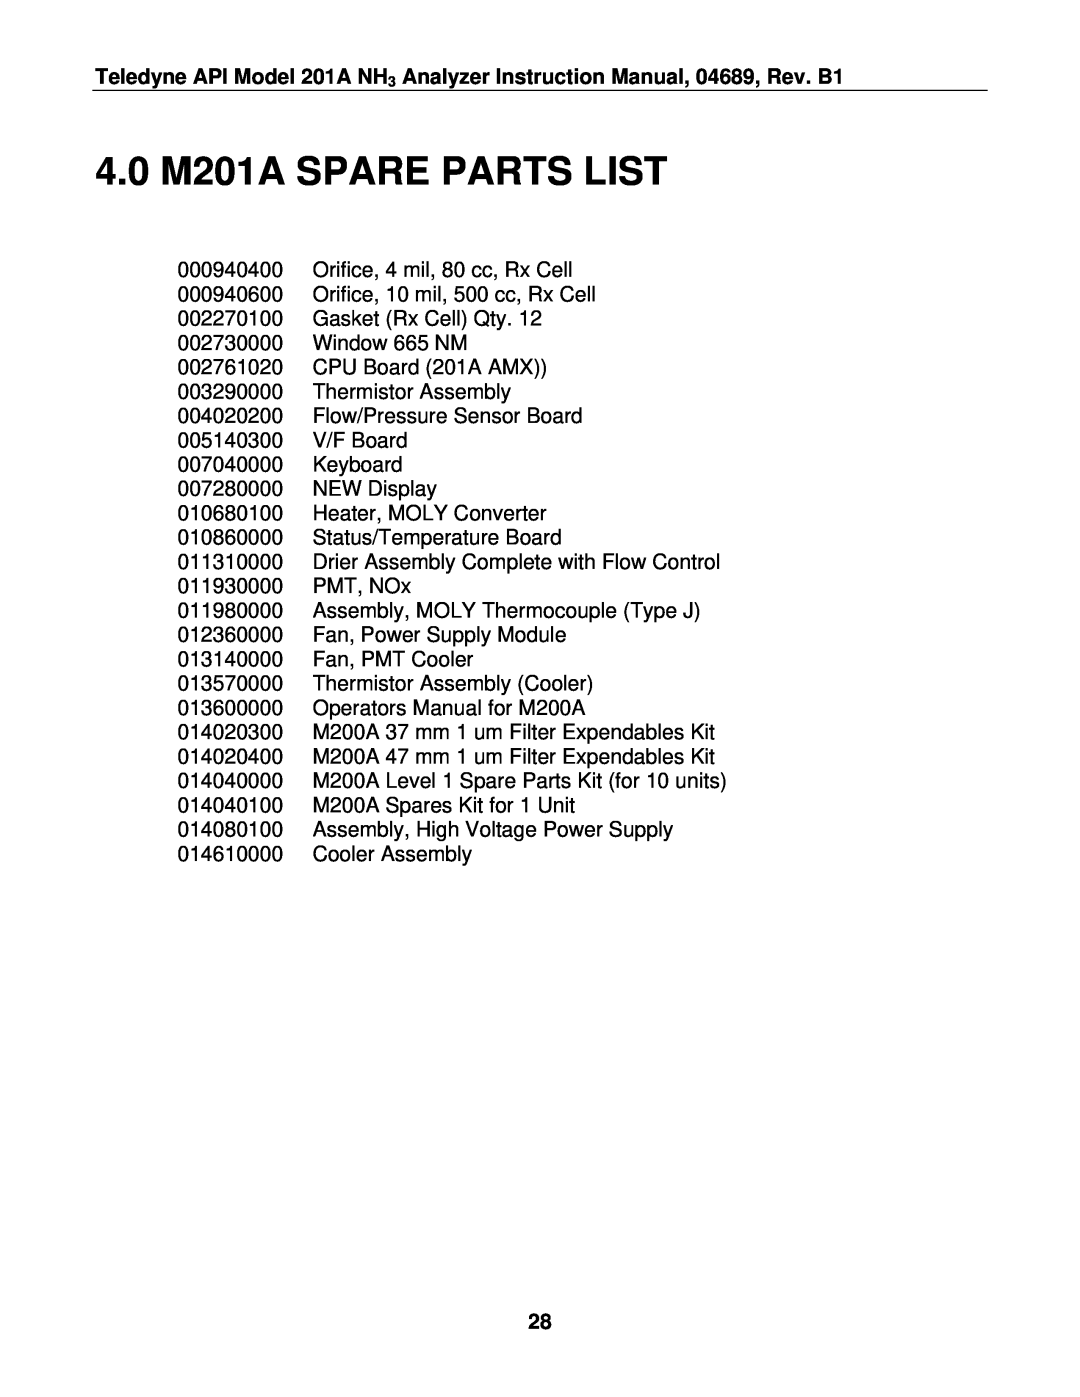 Teledyne manual 4.0 M201A SPARE PARTS LIST 